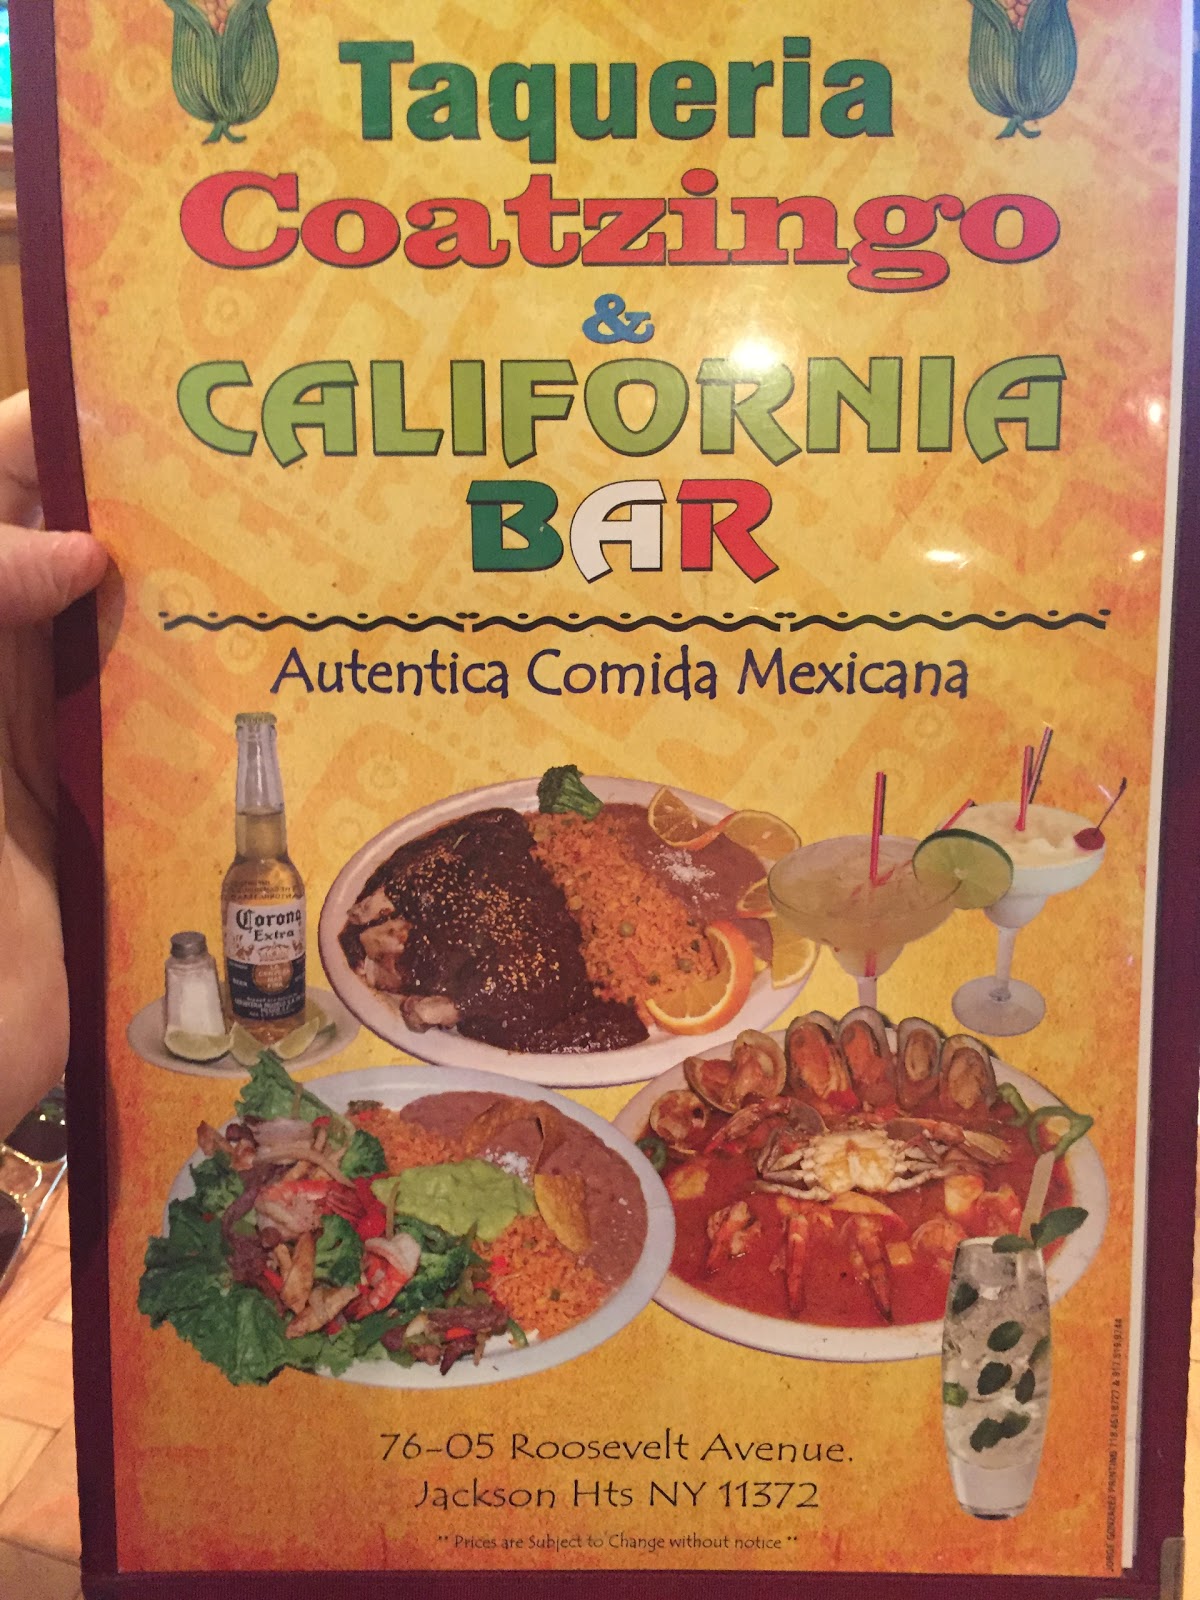 Photo of Taqueria Coatzingo in Queens City, New York, United States - 4 Picture of Restaurant, Food, Point of interest, Establishment